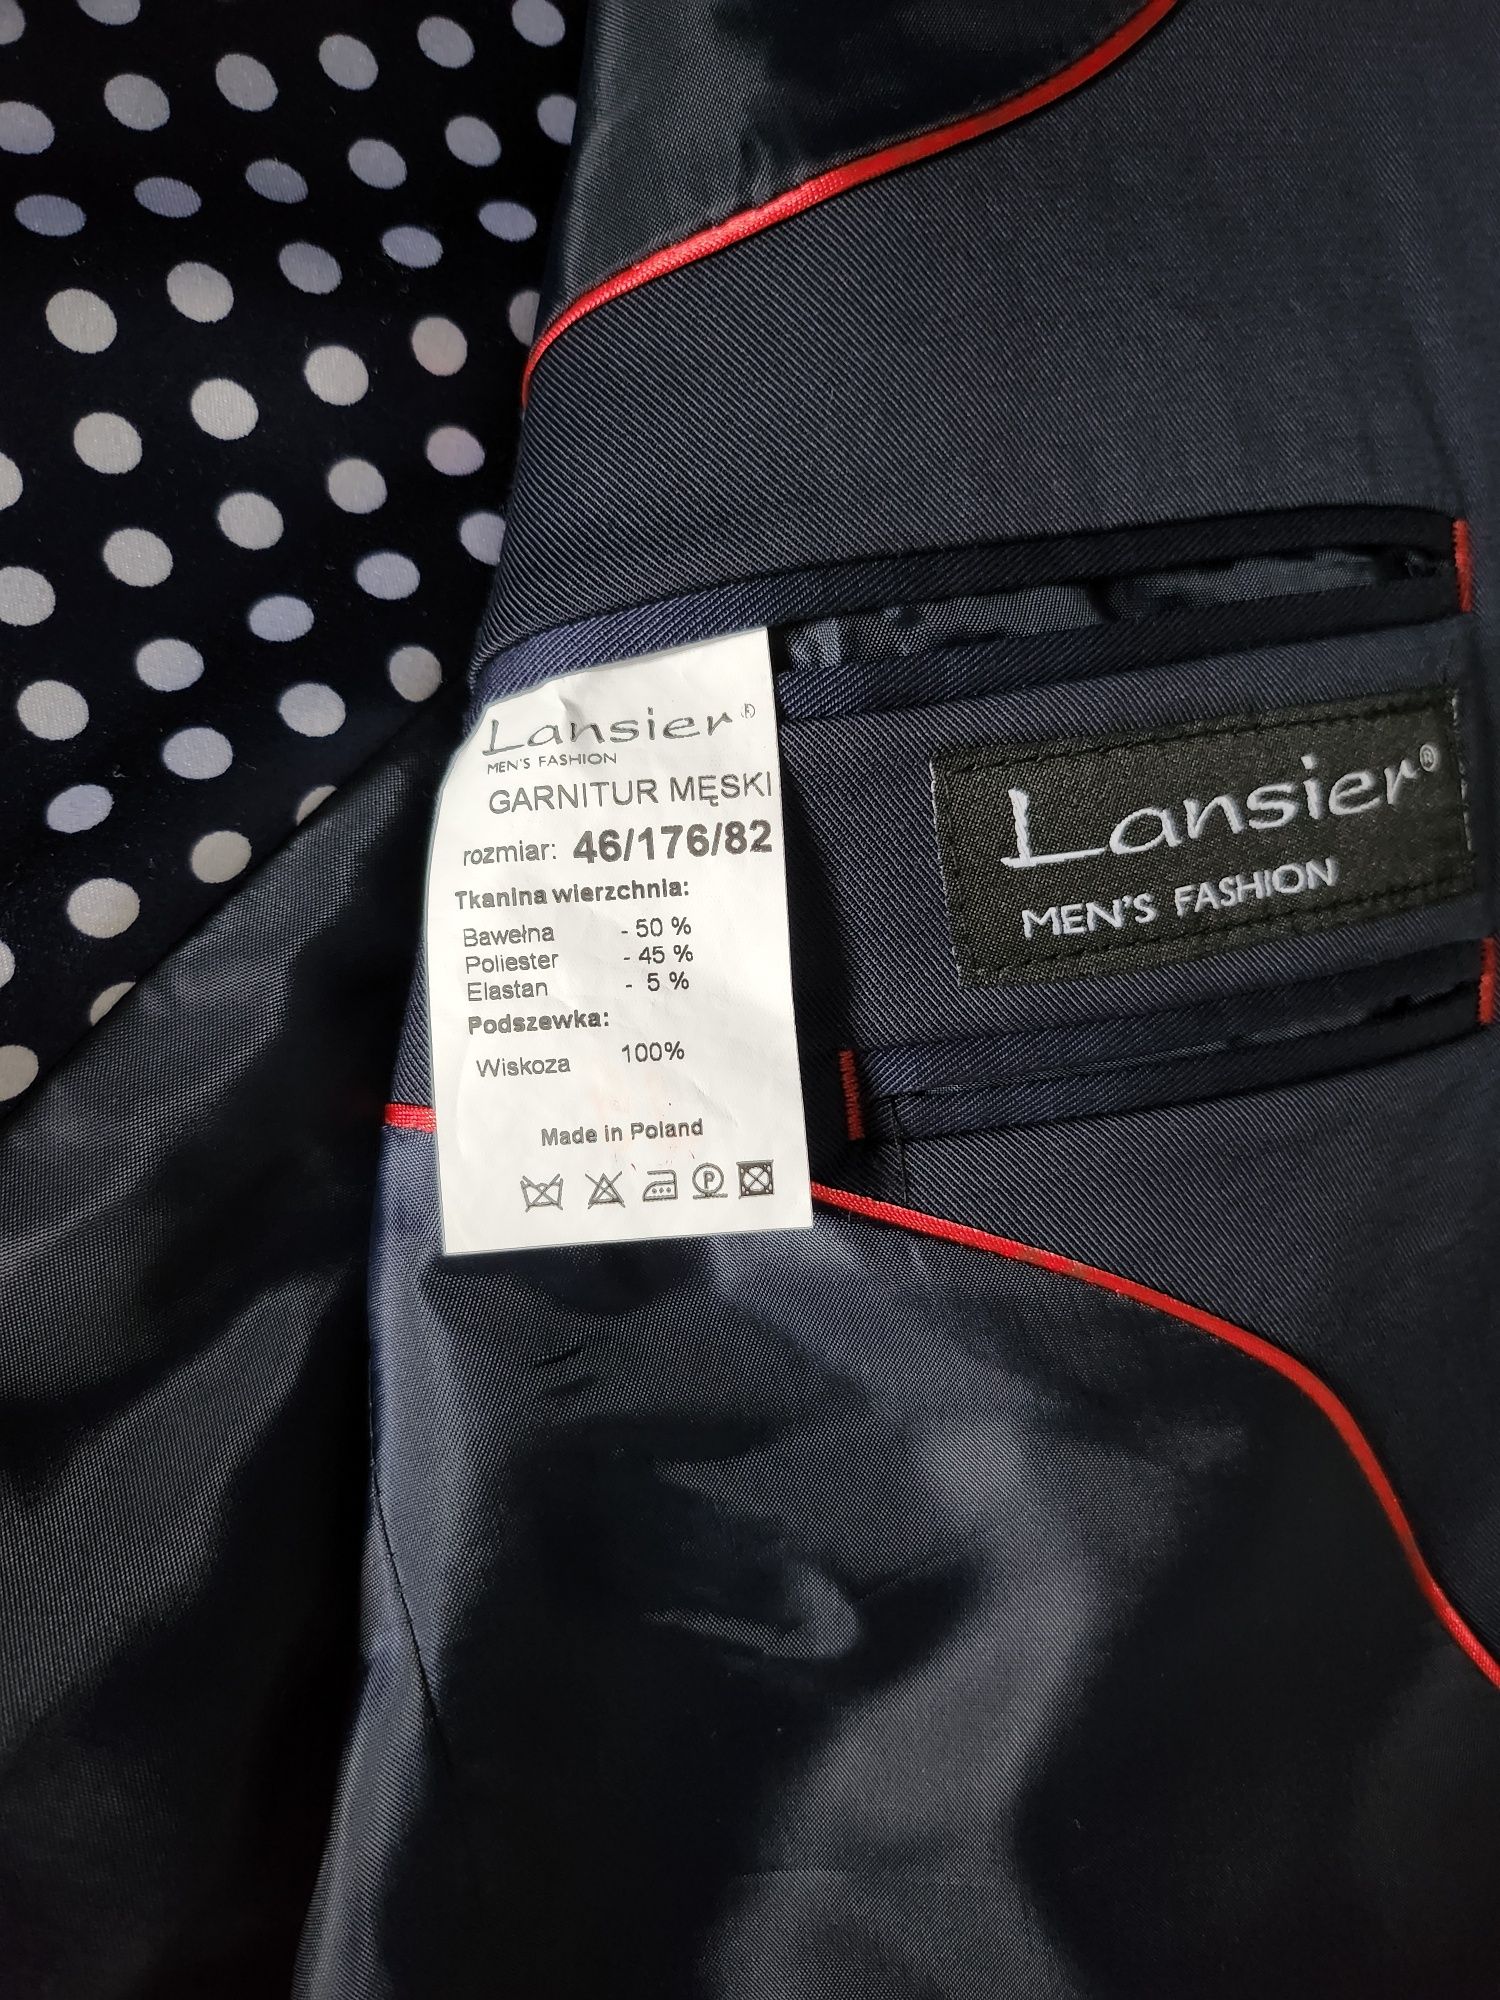 Garnitur męski Lansier spodnie + marynarka